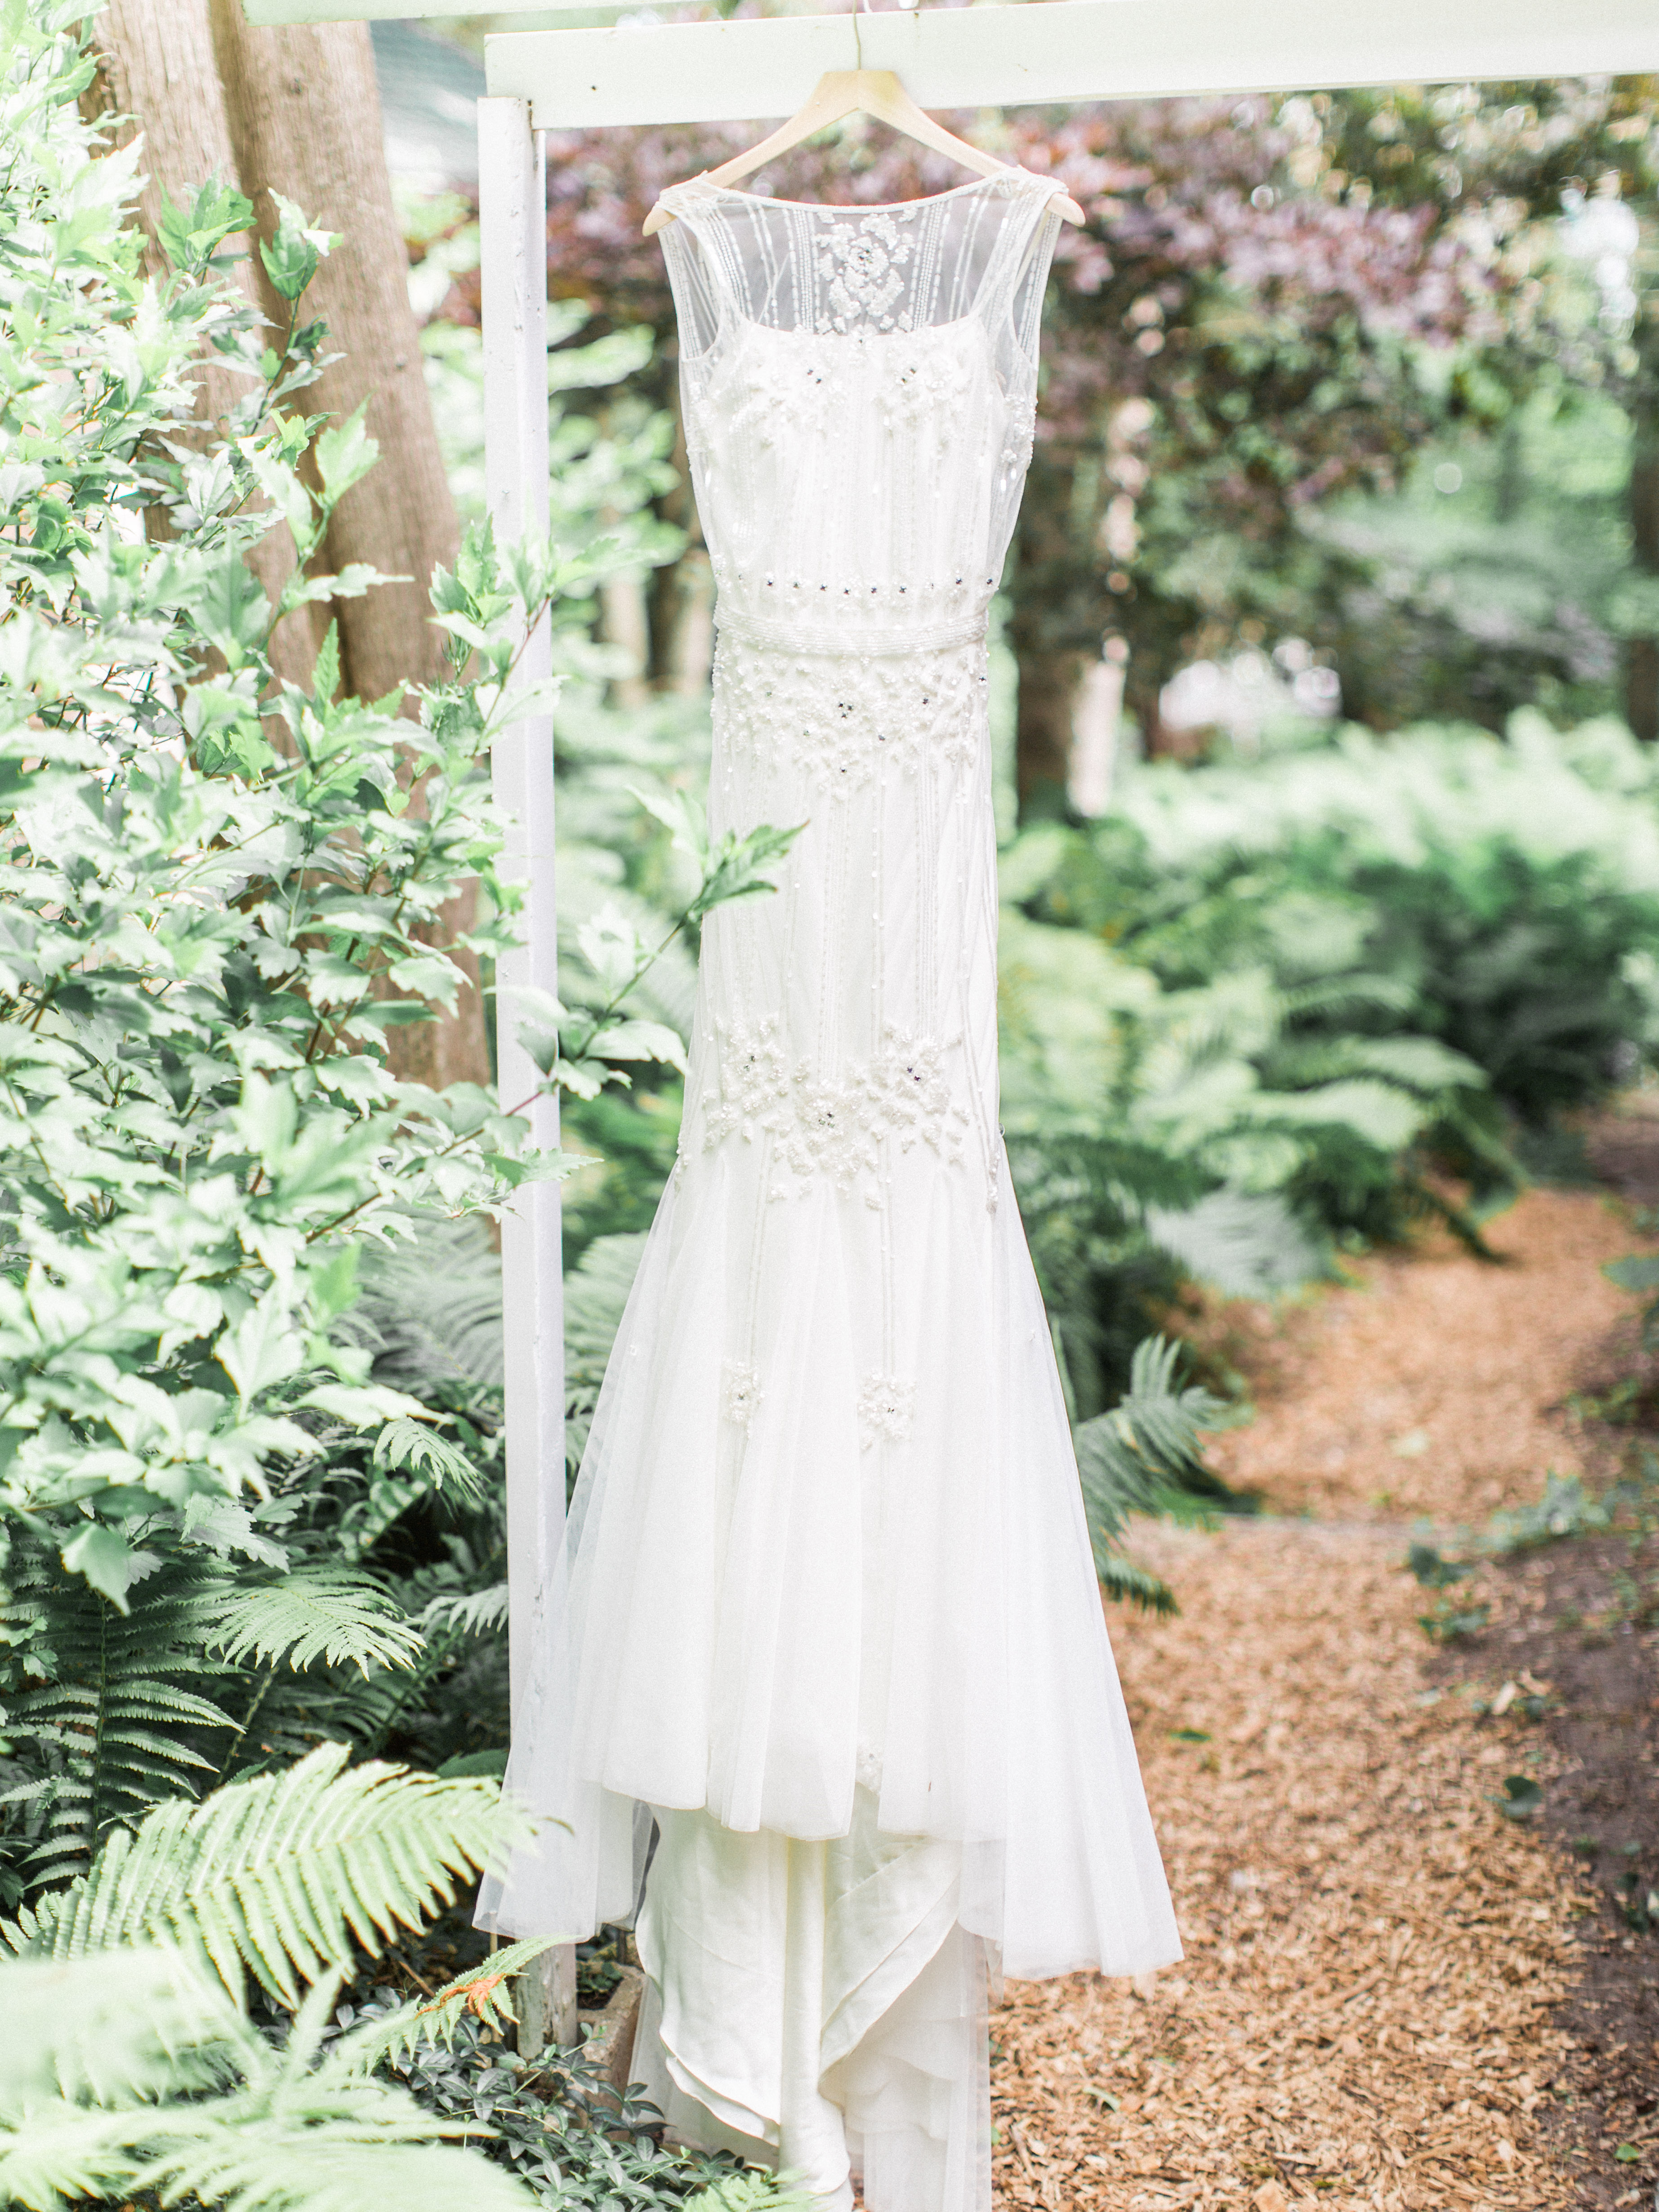 Woodland Wedding | The Day's Design | Samantha James Photography